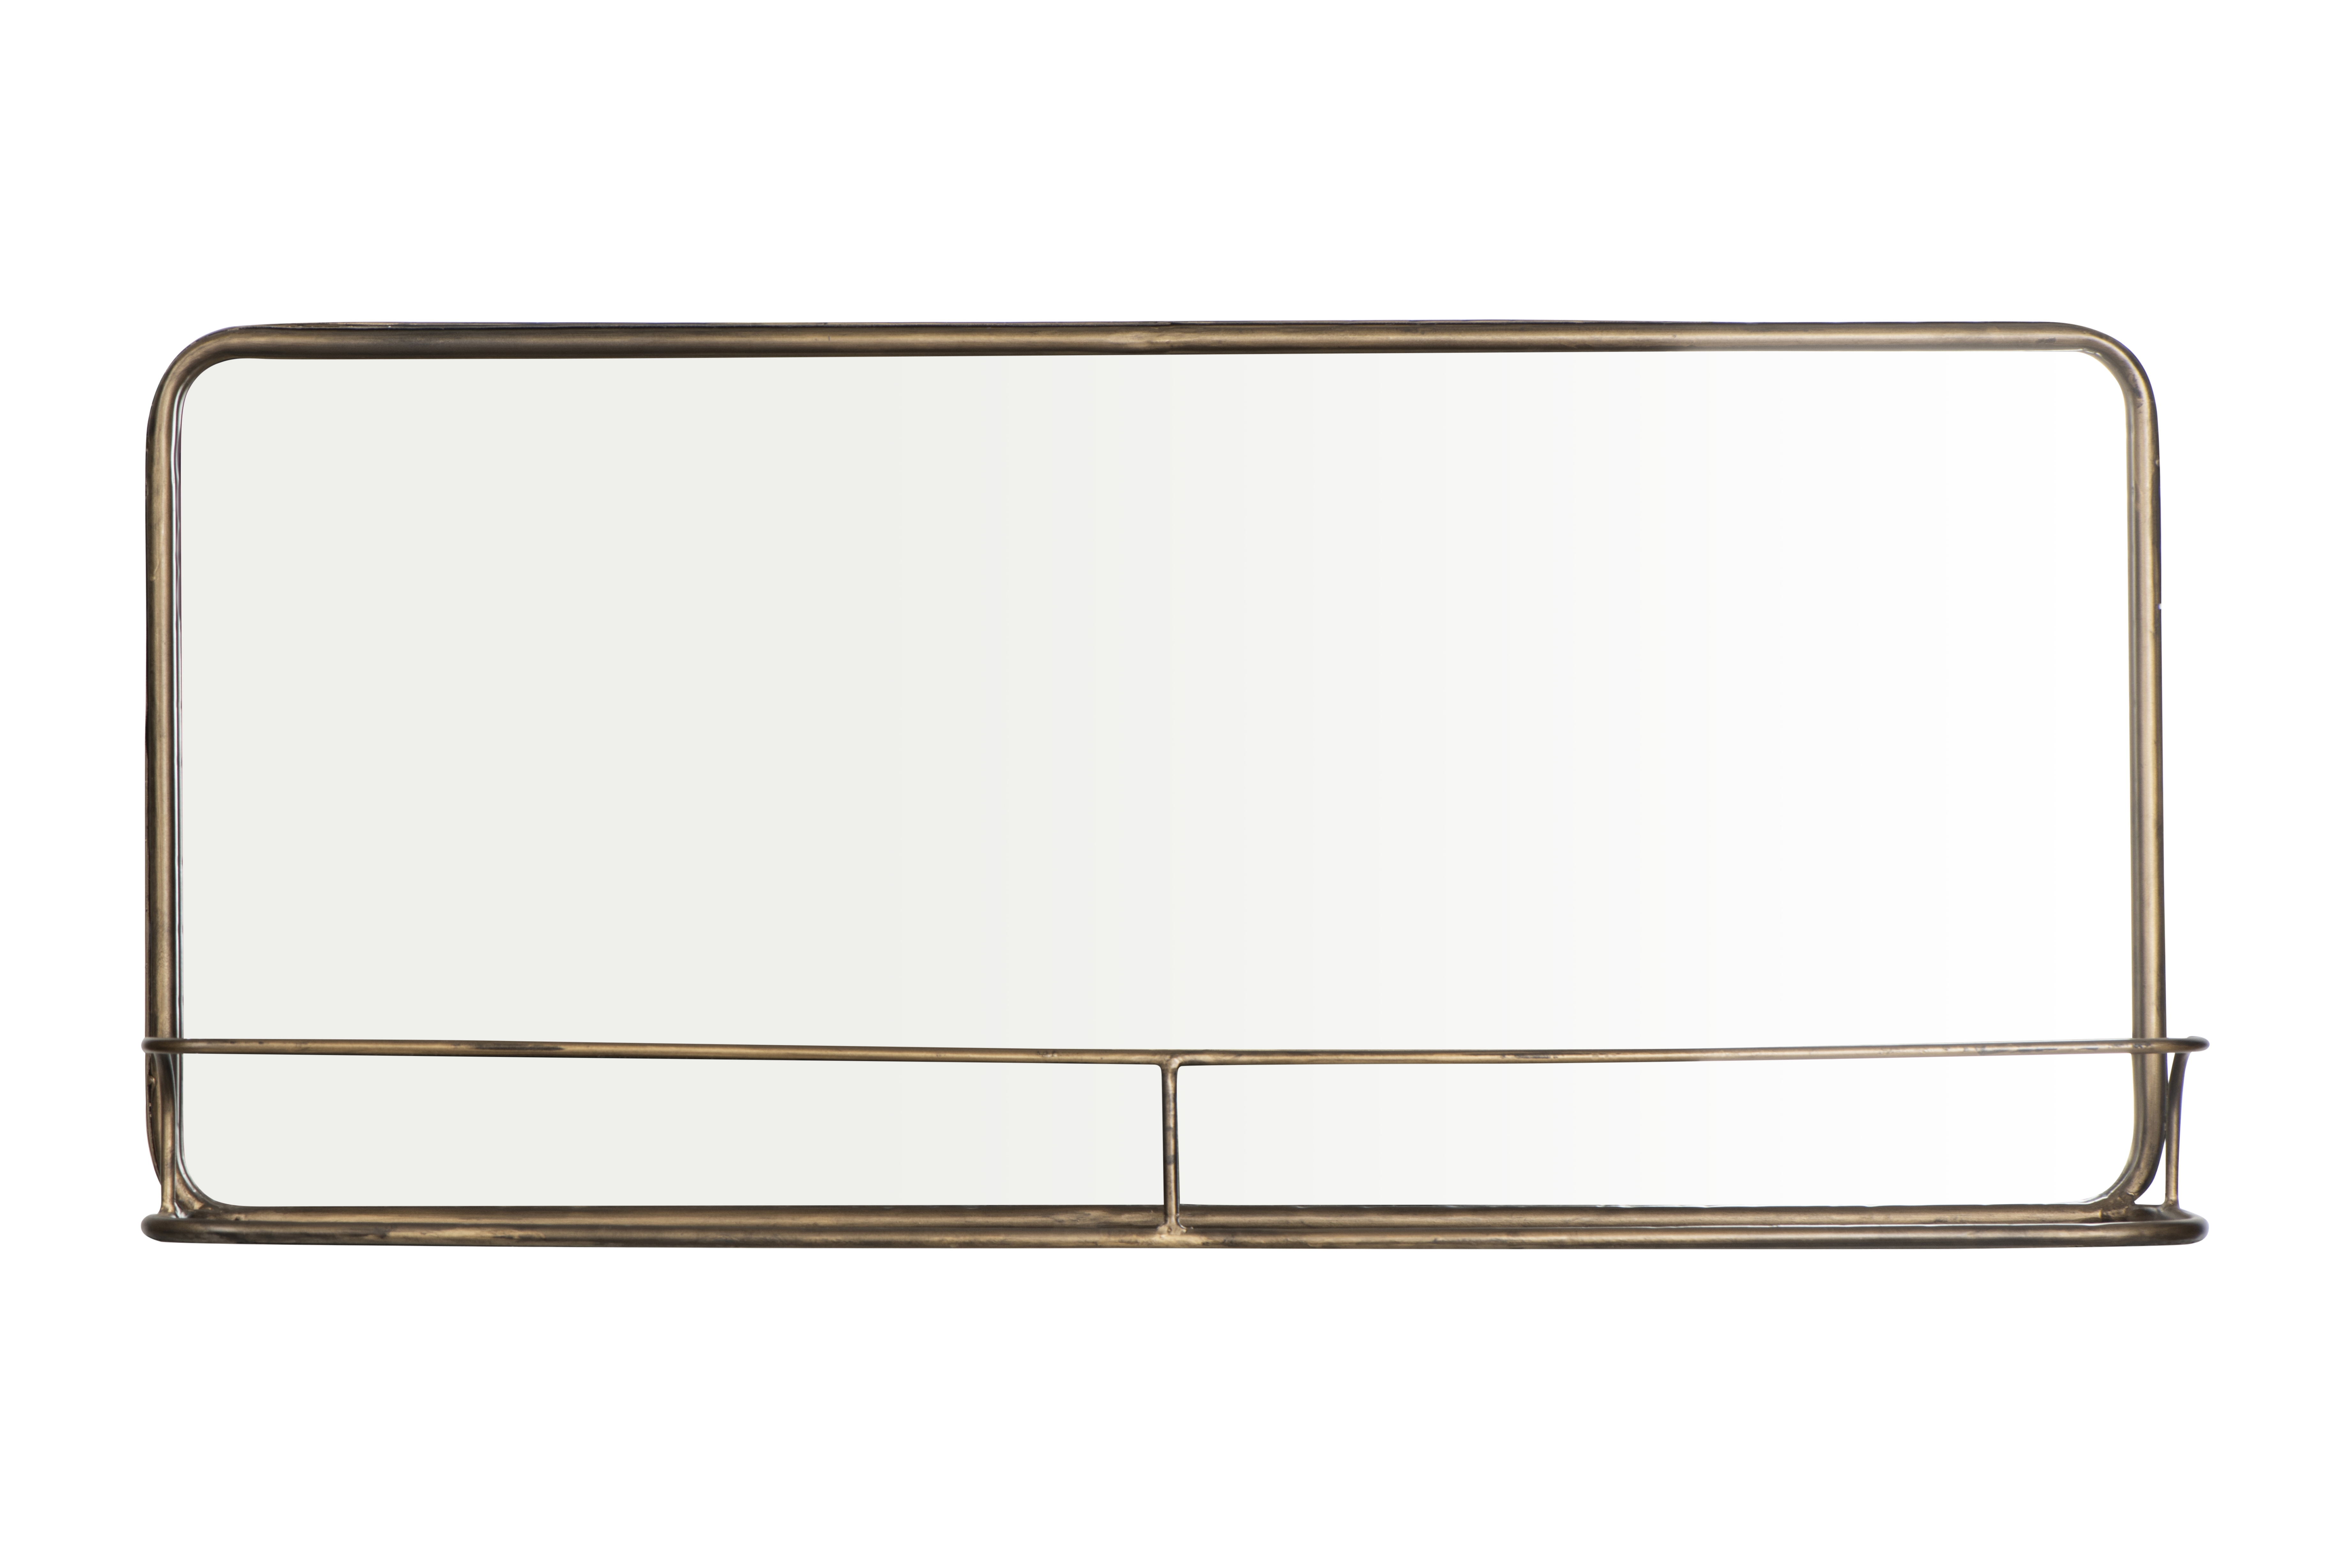 Brass Metal Framed Mirror with Shelf - Image 0